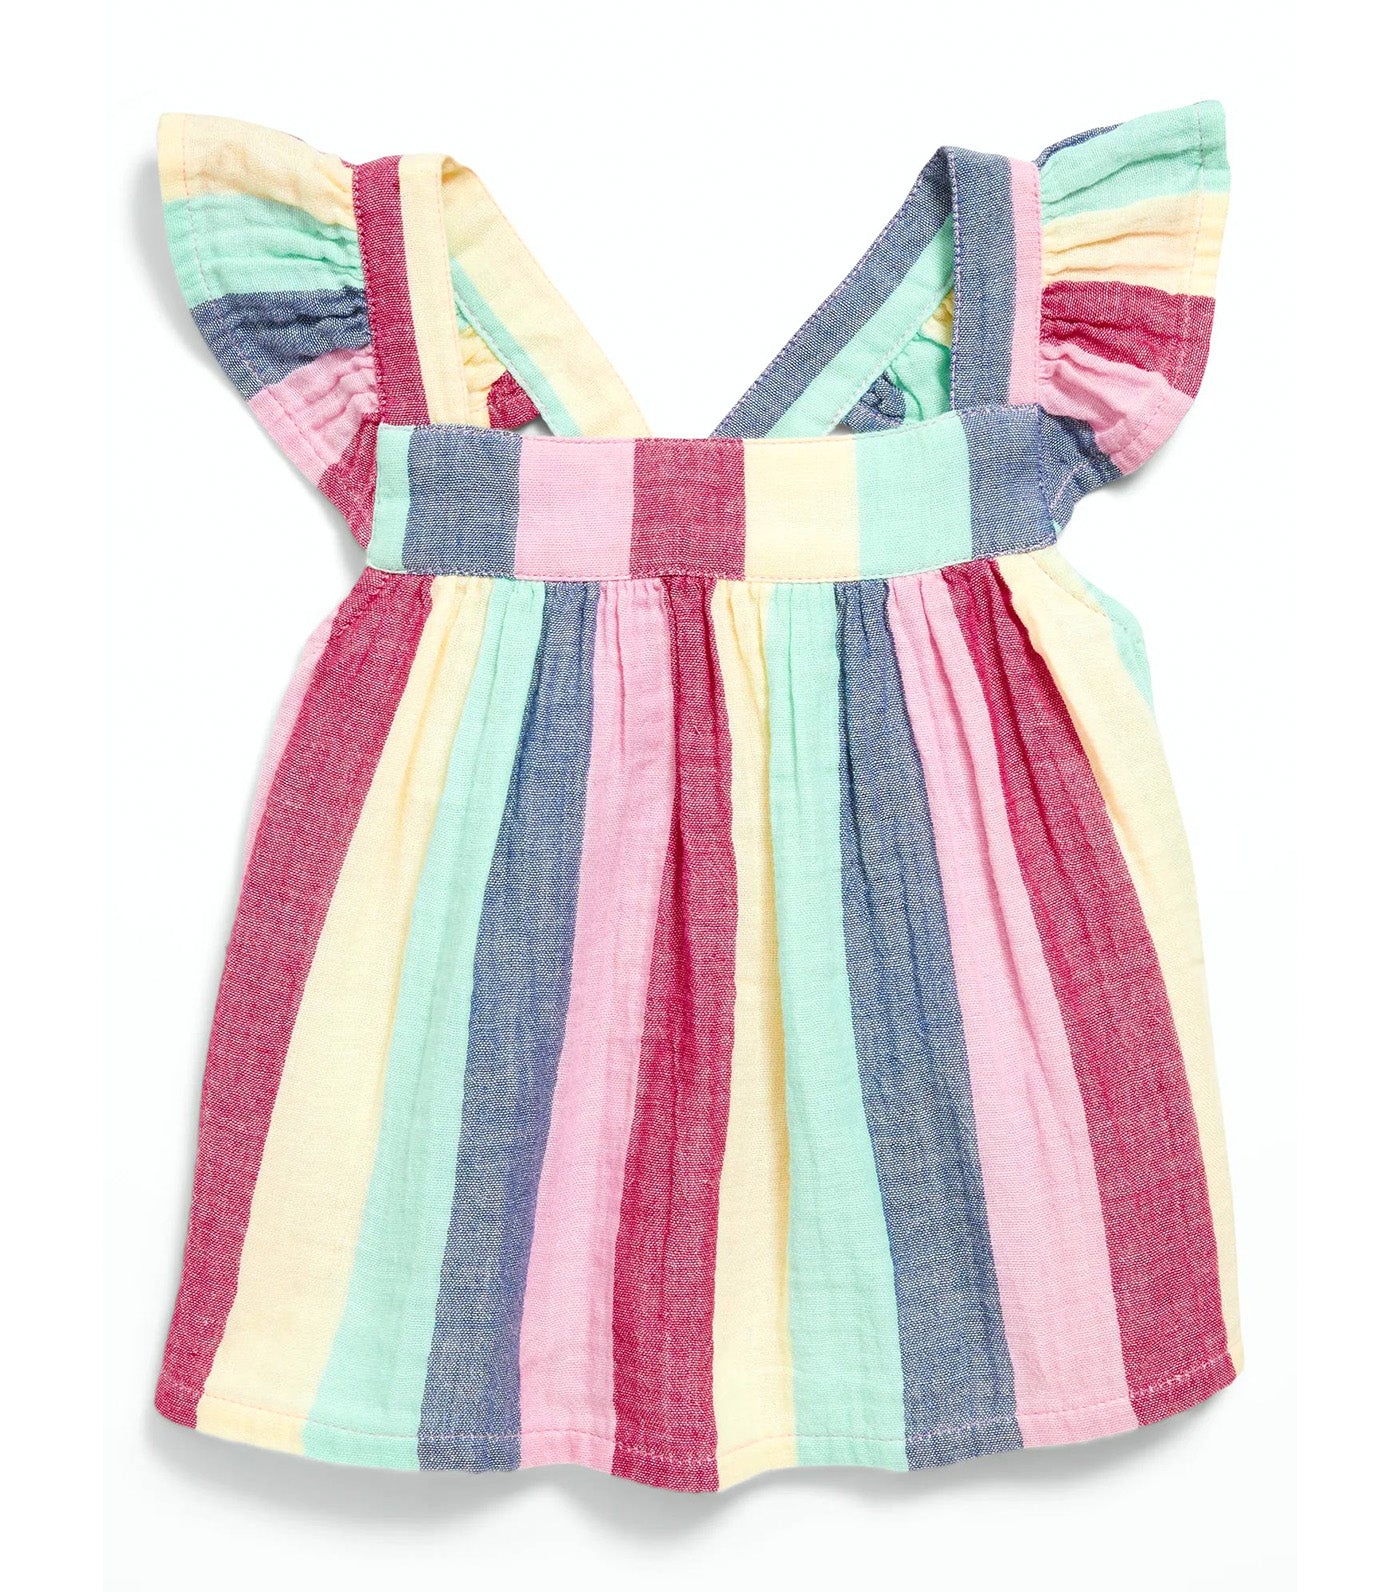 Sleeveless Ruffle-Trim Top for Toddler Girls - Multi Stripe